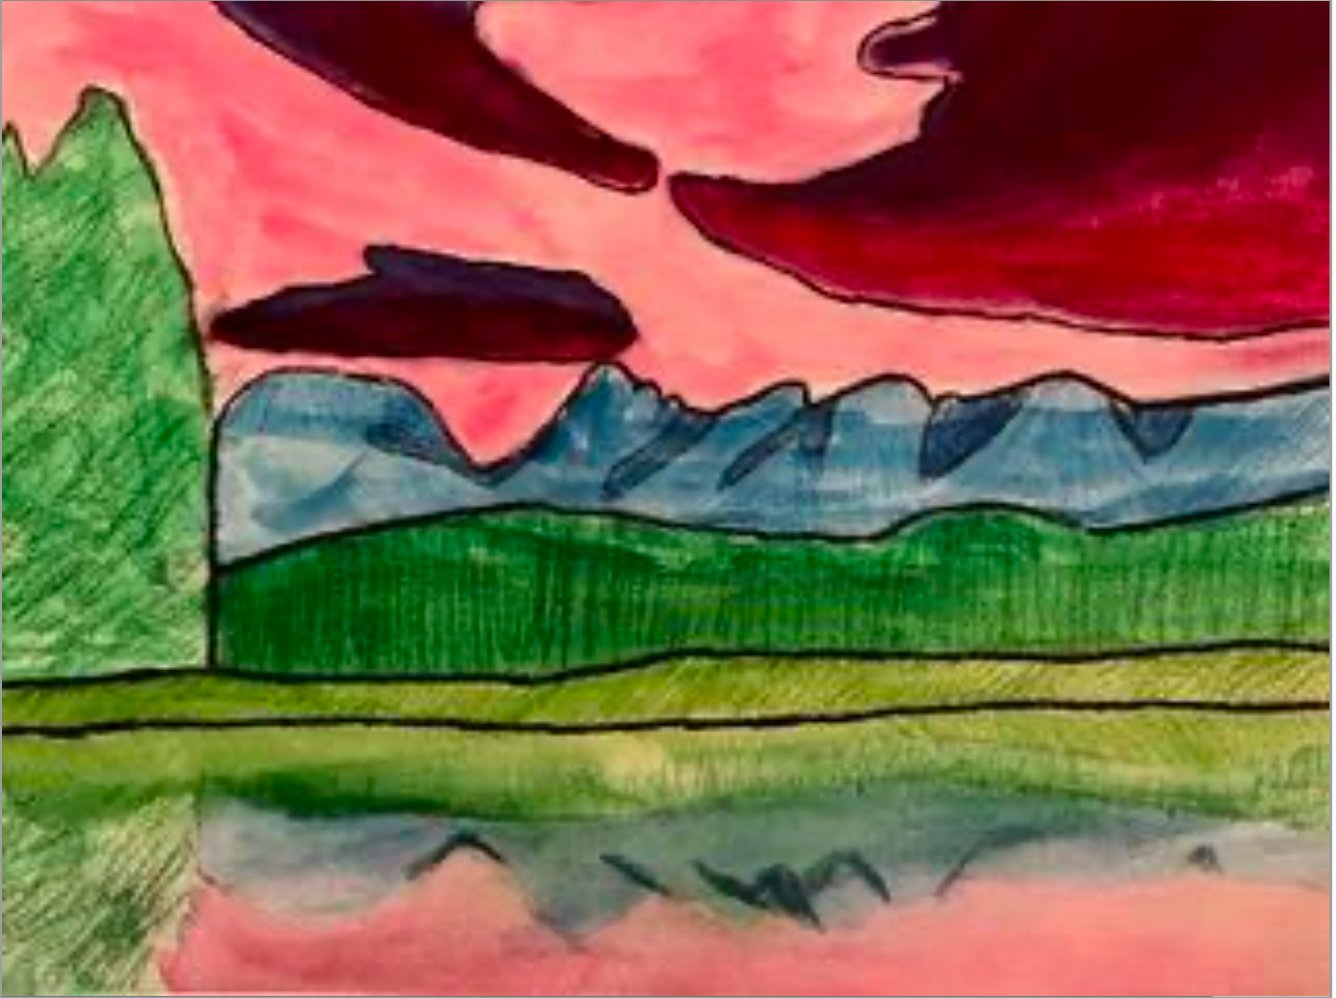 Myles Hosey's "Landscape"